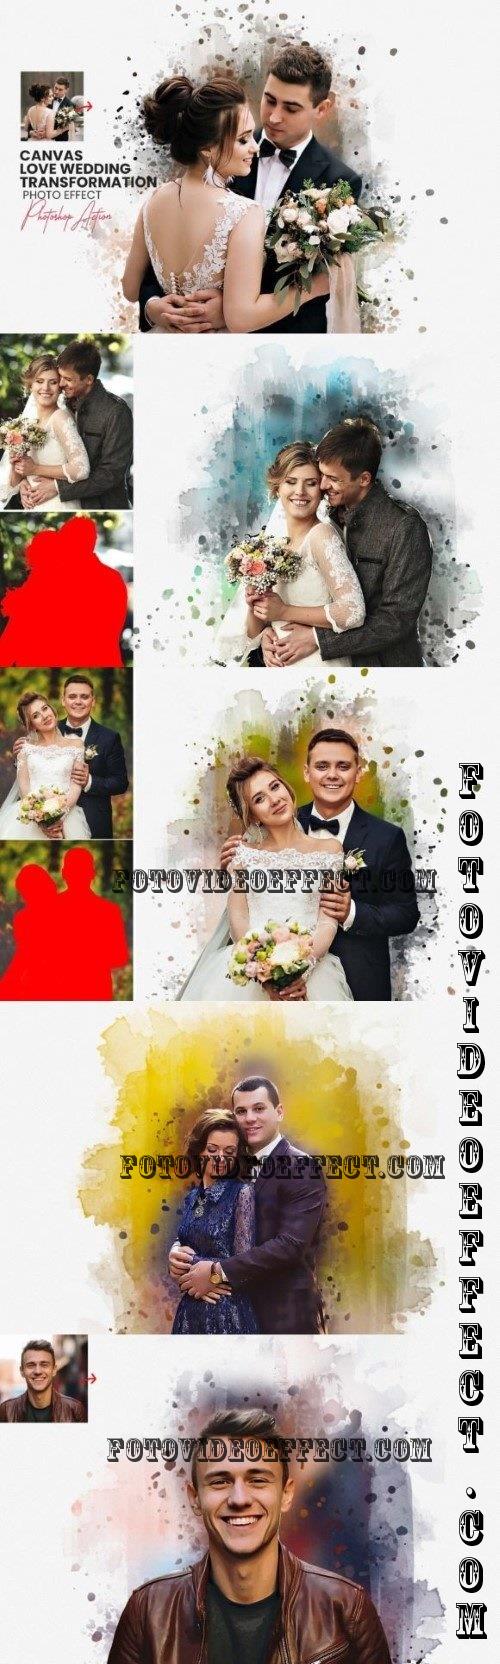 Canvas Love Wedding Transformation - 92181636